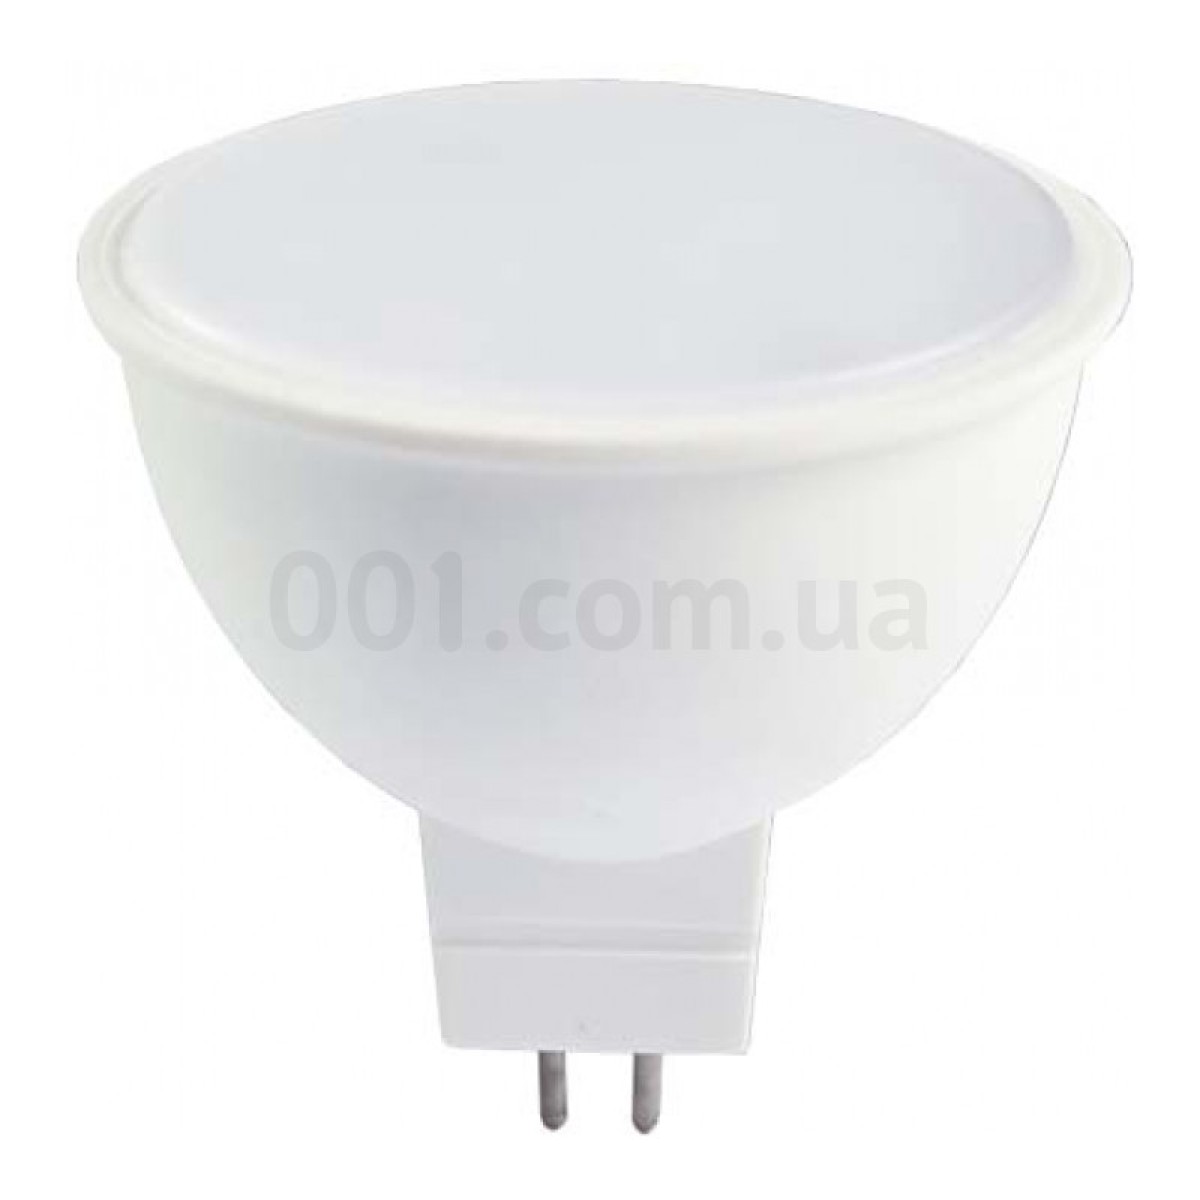 Светодиодная лампа LB-240 MR16 4Вт 6400K G5.3, Feron 98_98.jpg